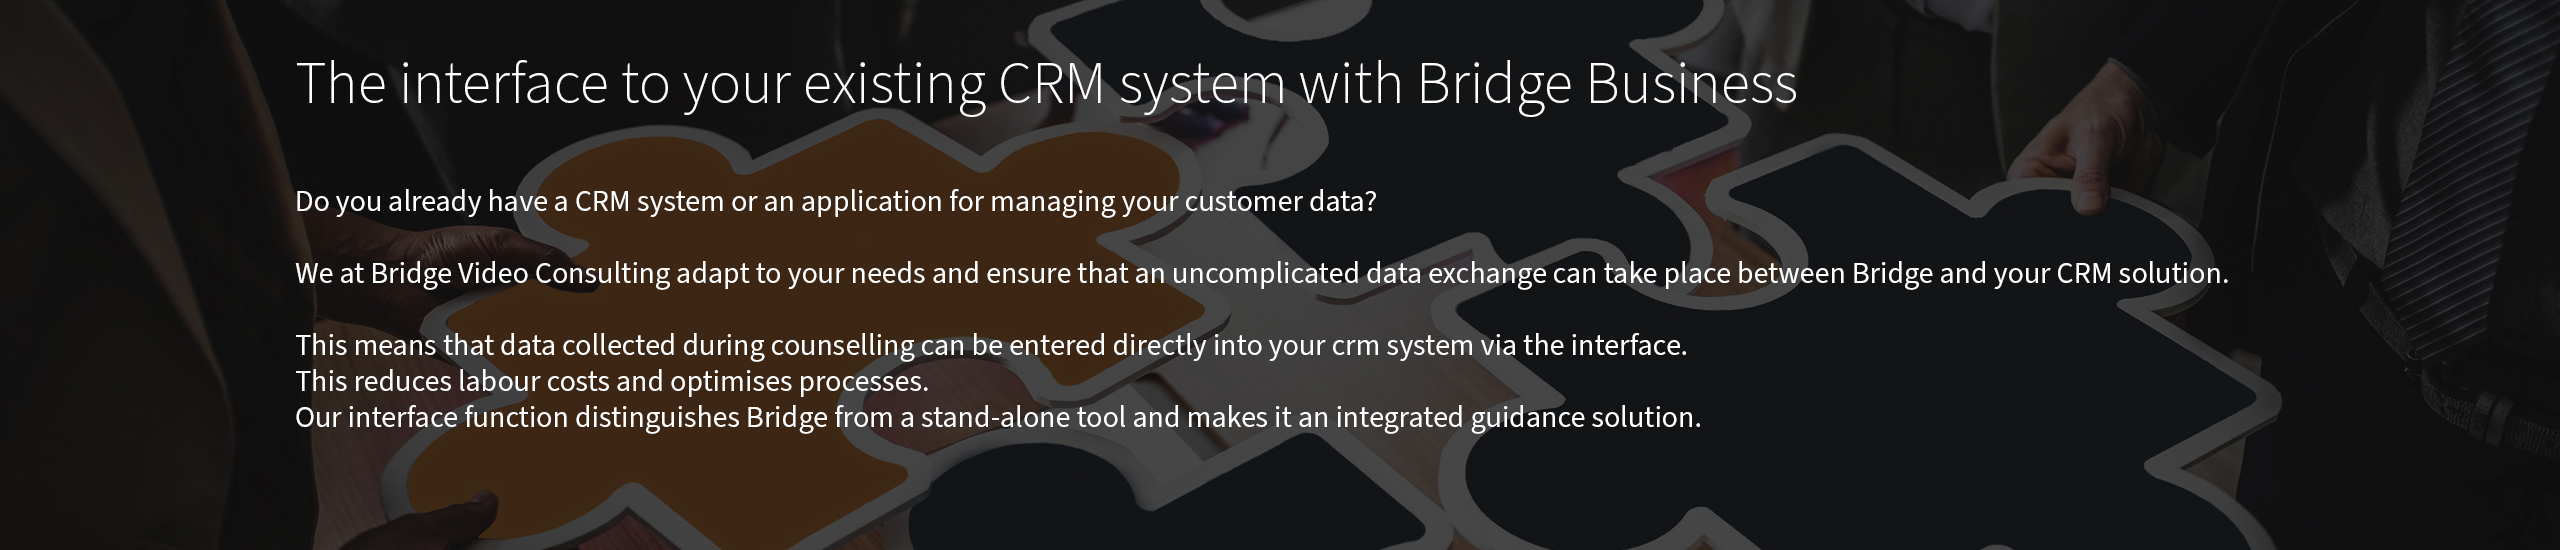 Advantages with CRM interface to sales tool Bridge for our Bridge business clients